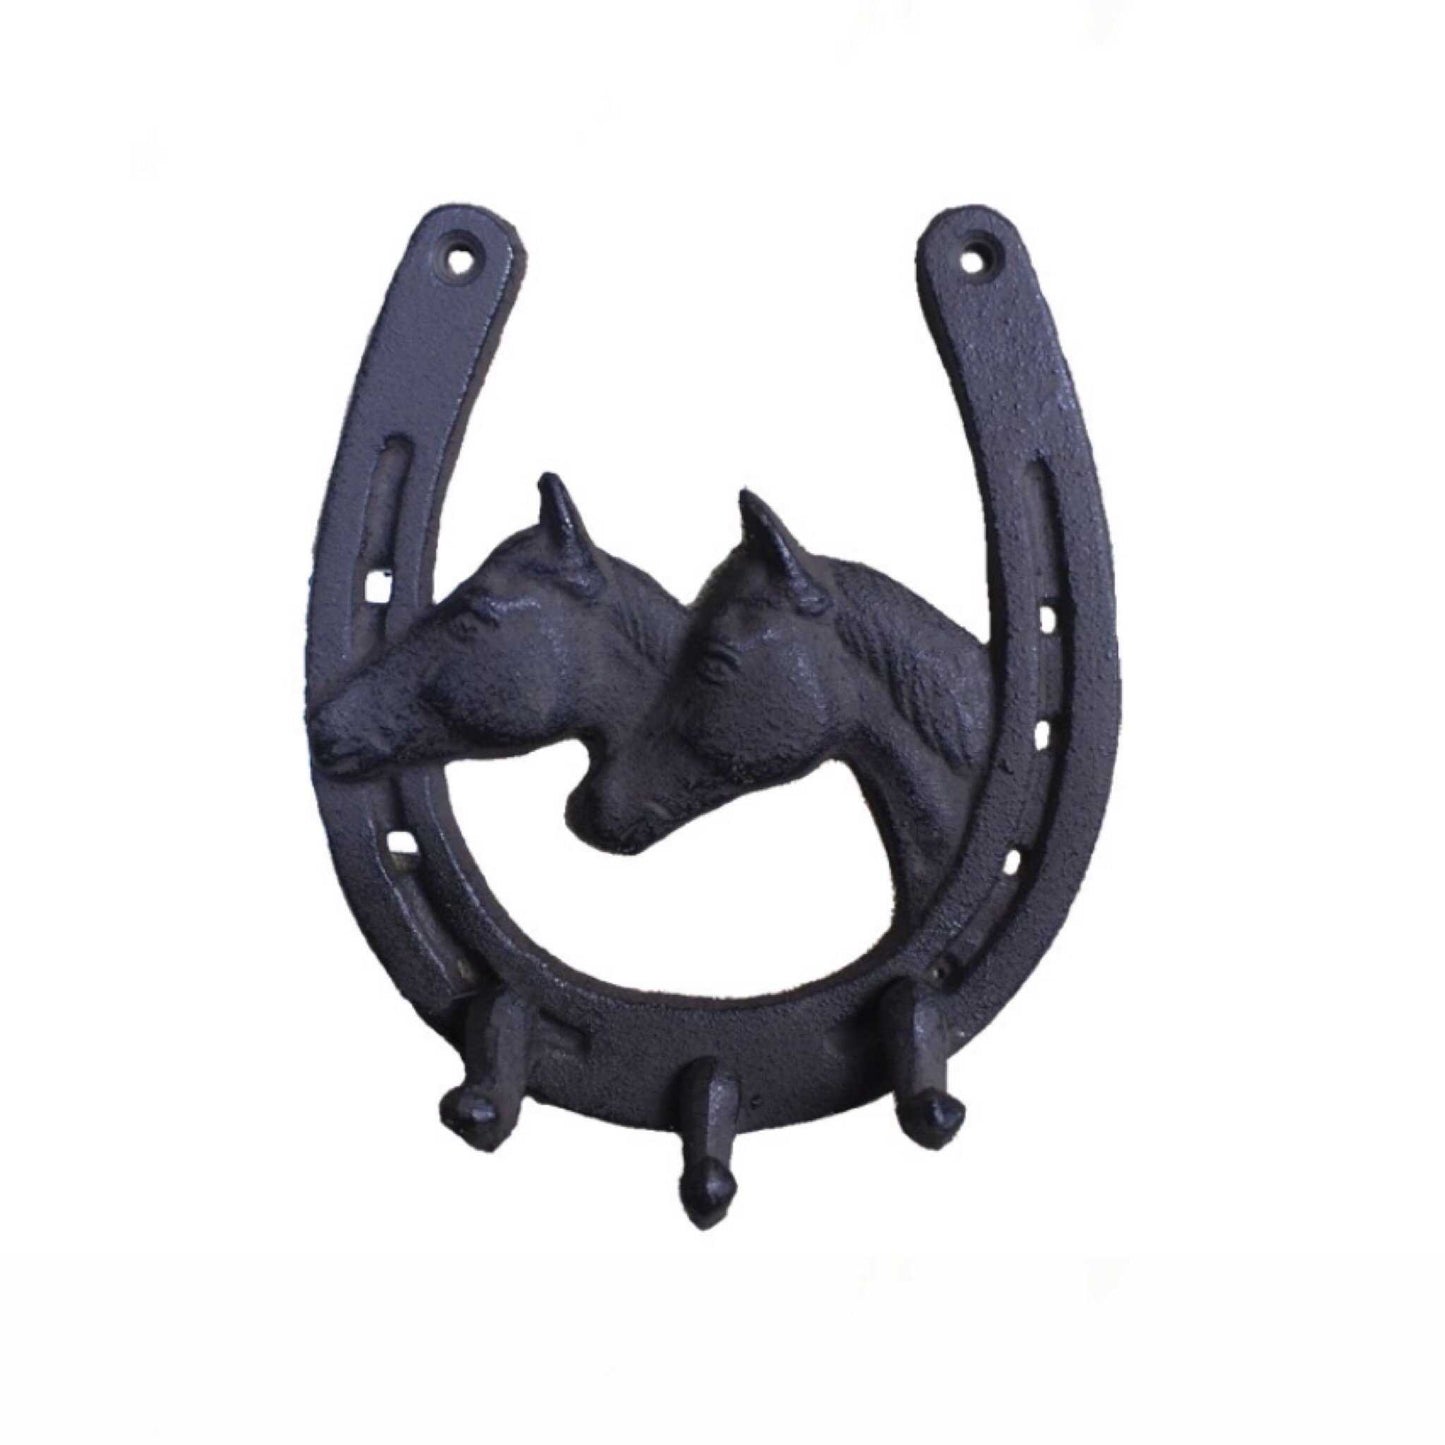 Hook Horse Shoe Rustic Cast Iron